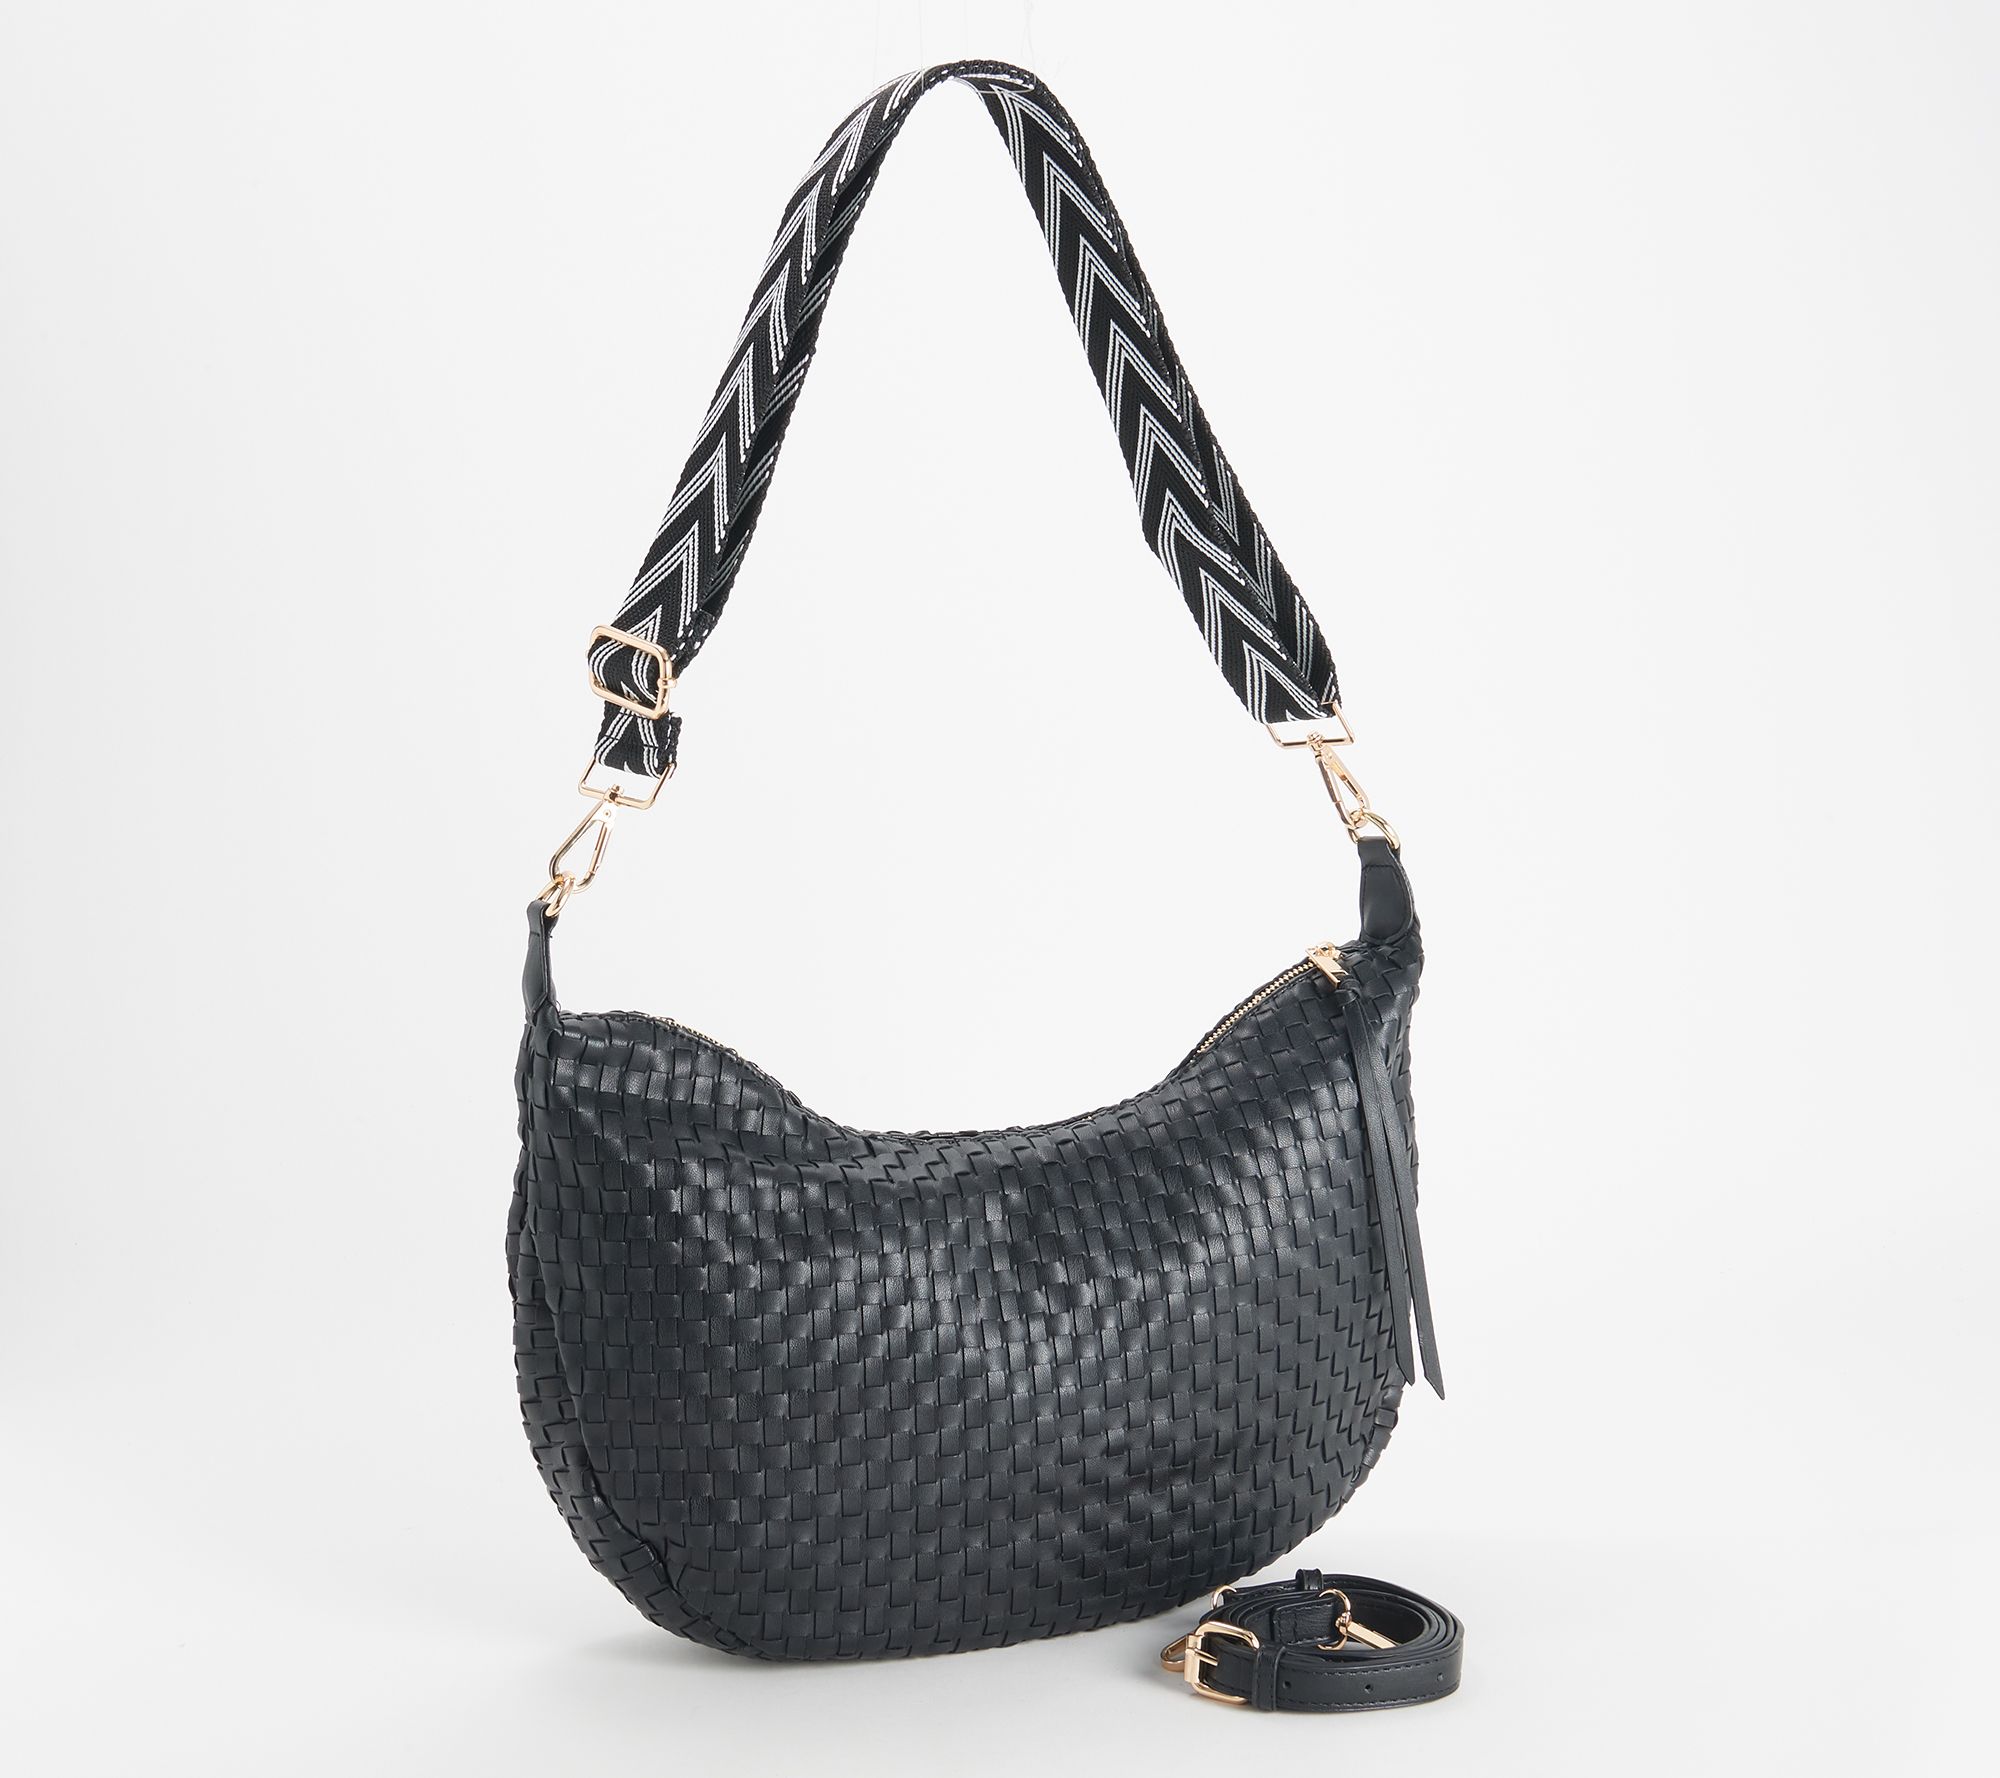 Original quality PU leather handbag purse cute moon bag Female